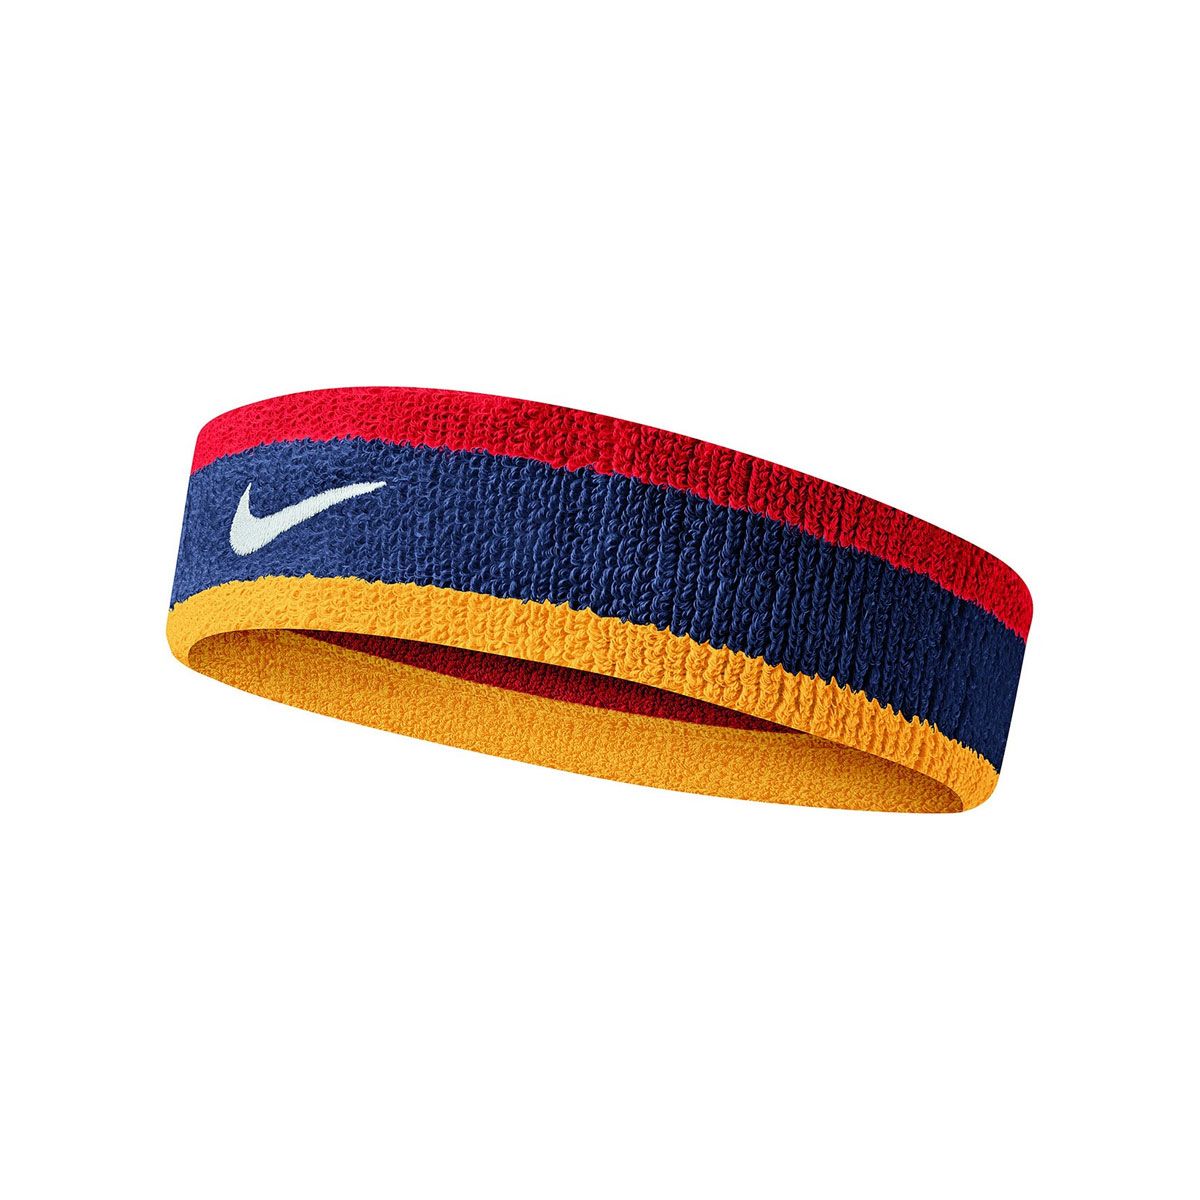 Swoosh Headband Headband Red Blue Yellow